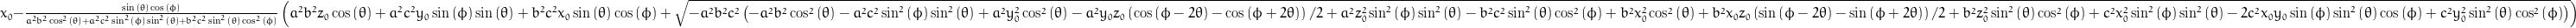 x_{0} - \frac{\sin{\left (\theta \right )} \cos{\left (\phi \right )}}{a^{2} b^{2} \cos^{2}{\left (\theta \right )} + a^{2} c^{2} \sin^{2}{\left (\phi \right )} \sin^{2}{\left (\theta \right )} + b^{2} c^{2} \sin^{2}{\left (\theta \right )} \cos^{2}{\left (\phi \right )}} \left(a^{2} b^{2} z_{0} \cos{\left (\theta \right )} + a^{2} c^{2} y_{0} \sin{\left (\phi \right )} \sin{\left (\theta \right )} + b^{2} c^{2} x_{0} \sin{\left (\theta \right )} \cos{\left (\phi \right )} + \sqrt{- a^{2} b^{2} c^{2} \left(- a^{2} b^{2} \cos^{2}{\left (\theta \right )} - a^{2} c^{2} \sin^{2}{\left (\phi \right )} \sin^{2}{\left (\theta \right )} + a^{2} y_{0}^{2} \cos^{2}{\left (\theta \right )} - \frac{y_{0} z_{0}}{2} a^{2} \left(\cos{\left (\phi - 2 \theta \right )} - \cos{\left (\phi + 2 \theta \right )}\right) + a^{2} z_{0}^{2} \sin^{2}{\left (\phi \right )} \sin^{2}{\left (\theta \right )} - b^{2} c^{2} \sin^{2}{\left (\theta \right )} \cos^{2}{\left (\phi \right )} + b^{2} x_{0}^{2} \cos^{2}{\left (\theta \right )} + \frac{x_{0} z_{0}}{2} b^{2} \left(\sin{\left (\phi - 2 \theta \right )} - \sin{\left (\phi + 2 \theta \right )}\right) + b^{2} z_{0}^{2} \sin^{2}{\left (\theta \right )} \cos^{2}{\left (\phi \right )} + c^{2} x_{0}^{2} \sin^{2}{\left (\phi \right )} \sin^{2}{\left (\theta \right )} - 2 c^{2} x_{0} y_{0} \sin{\left (\phi \right )} \sin^{2}{\left (\theta \right )} \cos{\left (\phi \right )} + c^{2} y_{0}^{2} \sin^{2}{\left (\theta \right )} \cos^{2}{\left (\phi \right )}\right)}\right)